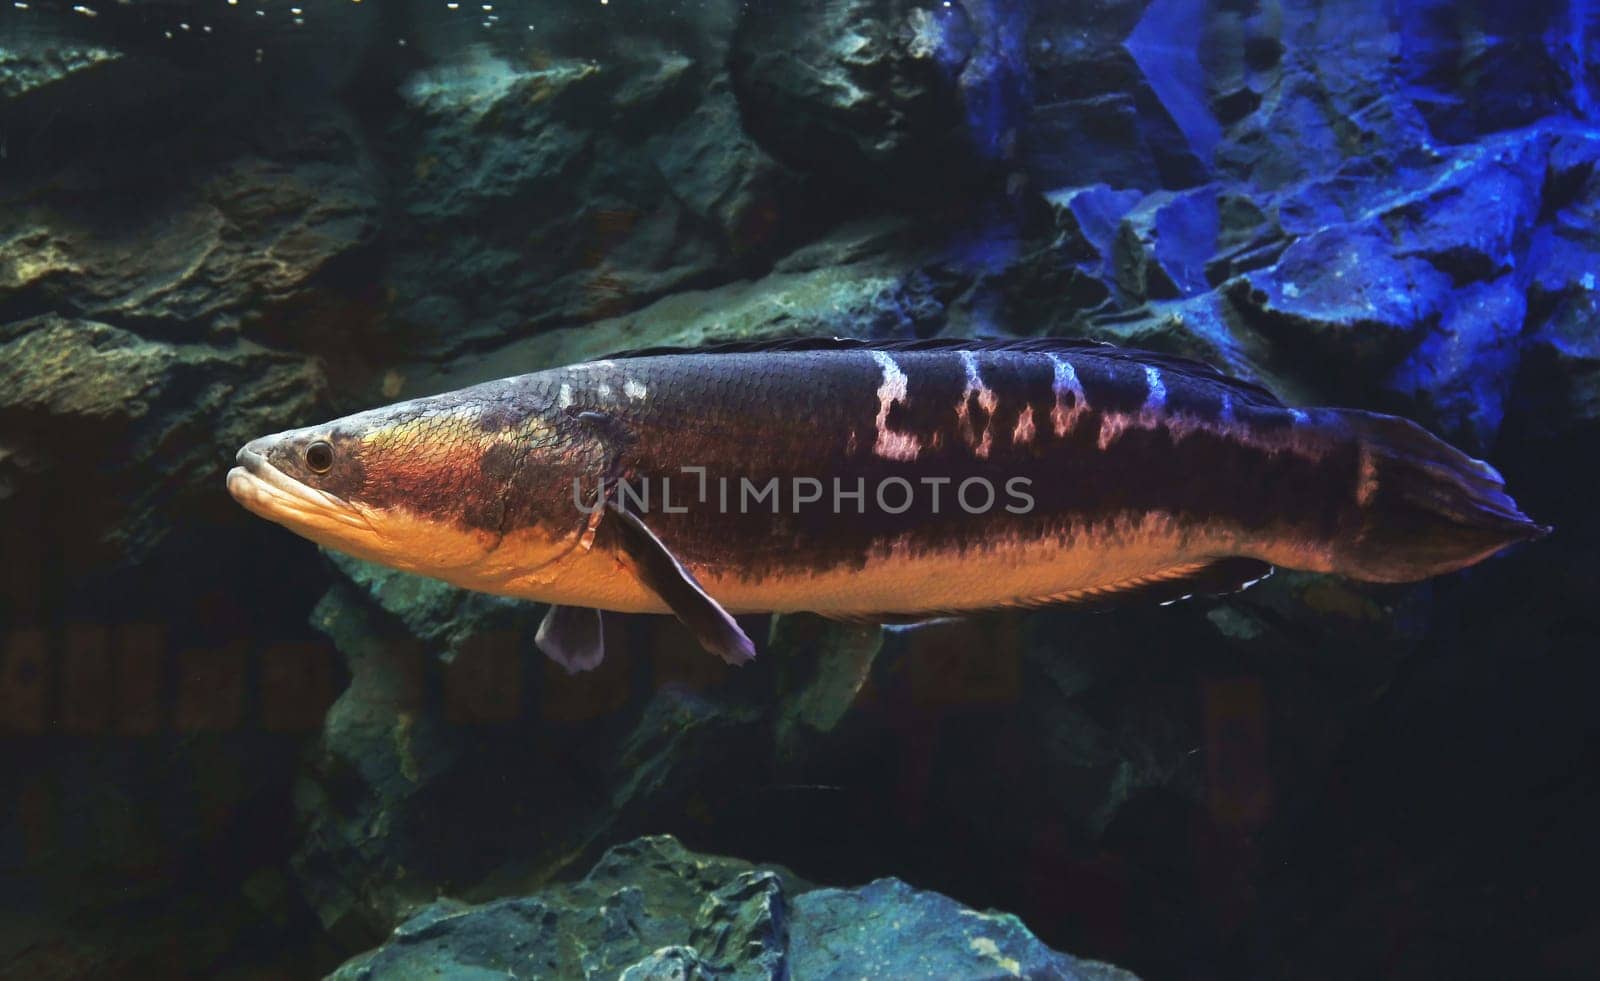 Giant snake head fish, giant mudfish is freshwater fish in aquarium tank